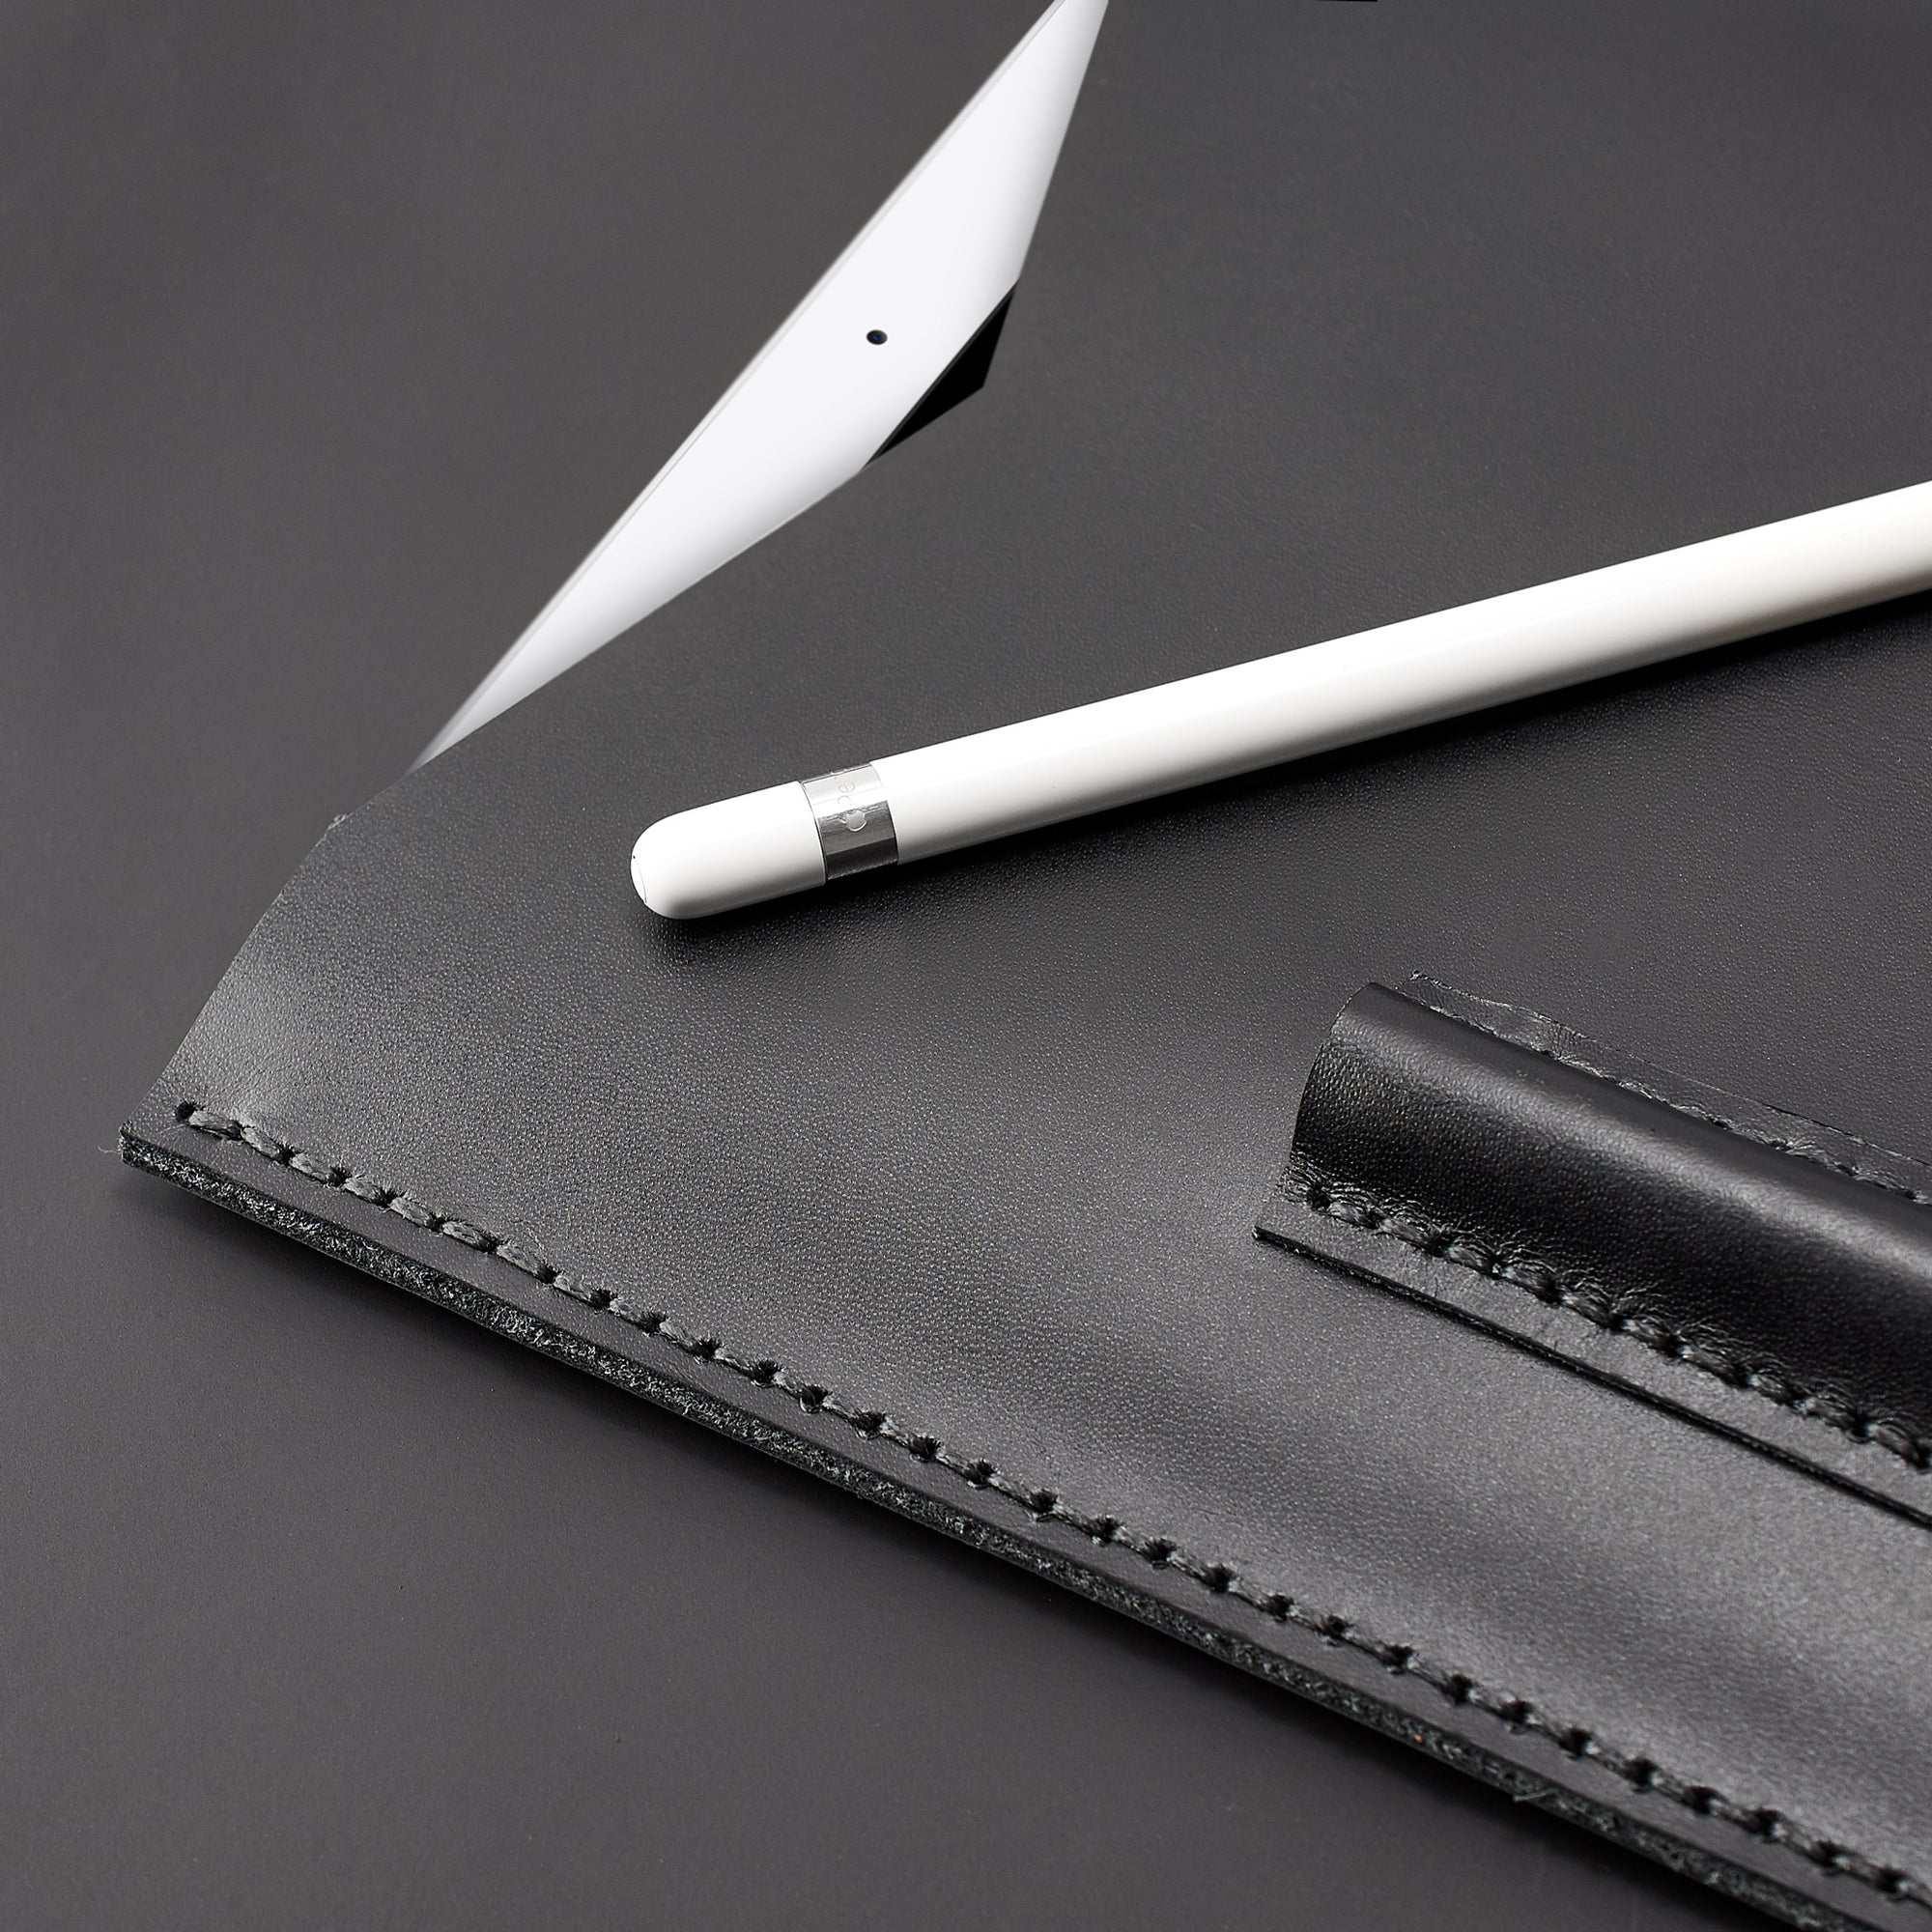 Hand stitch. Capra Leather iPad pro leather sleeve. Black leather sleeve for iPad pro 10.5 inch 12.9 inch. Mens gifts